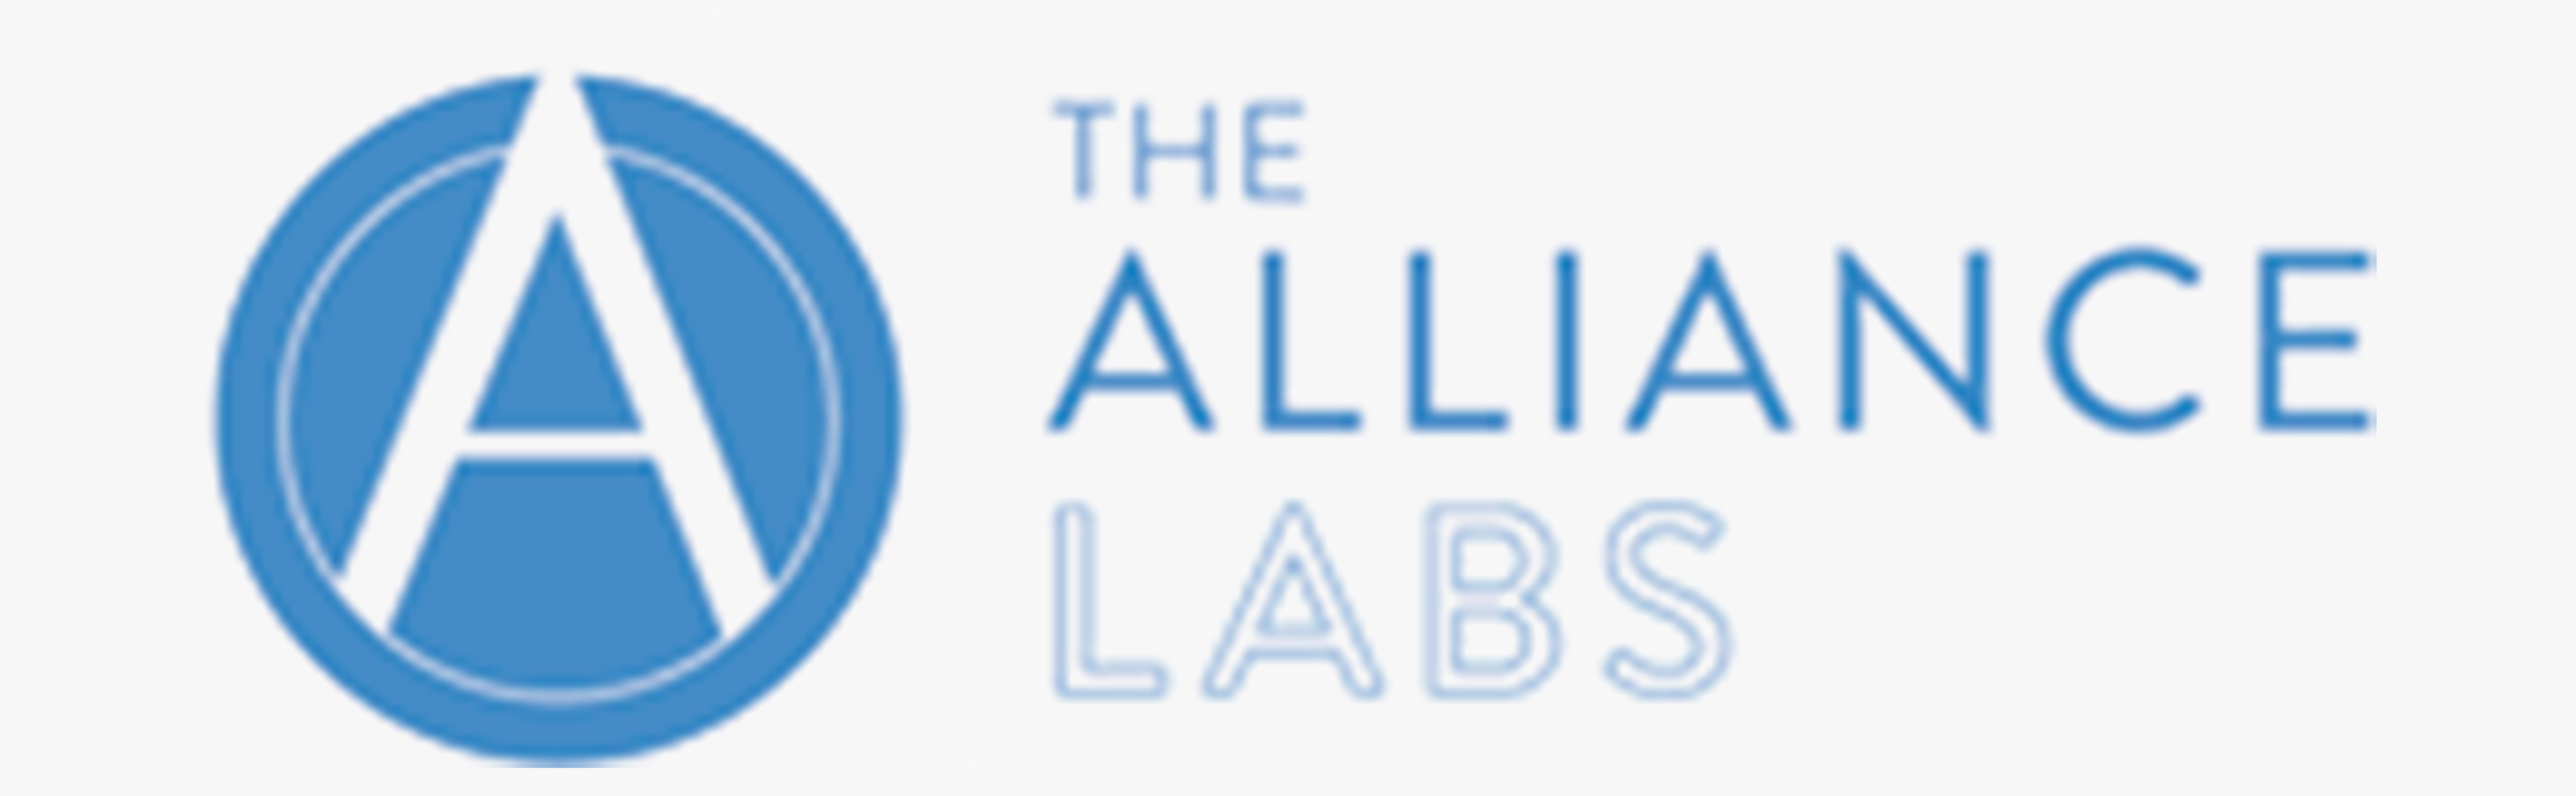 Alliance Labs, LLC.